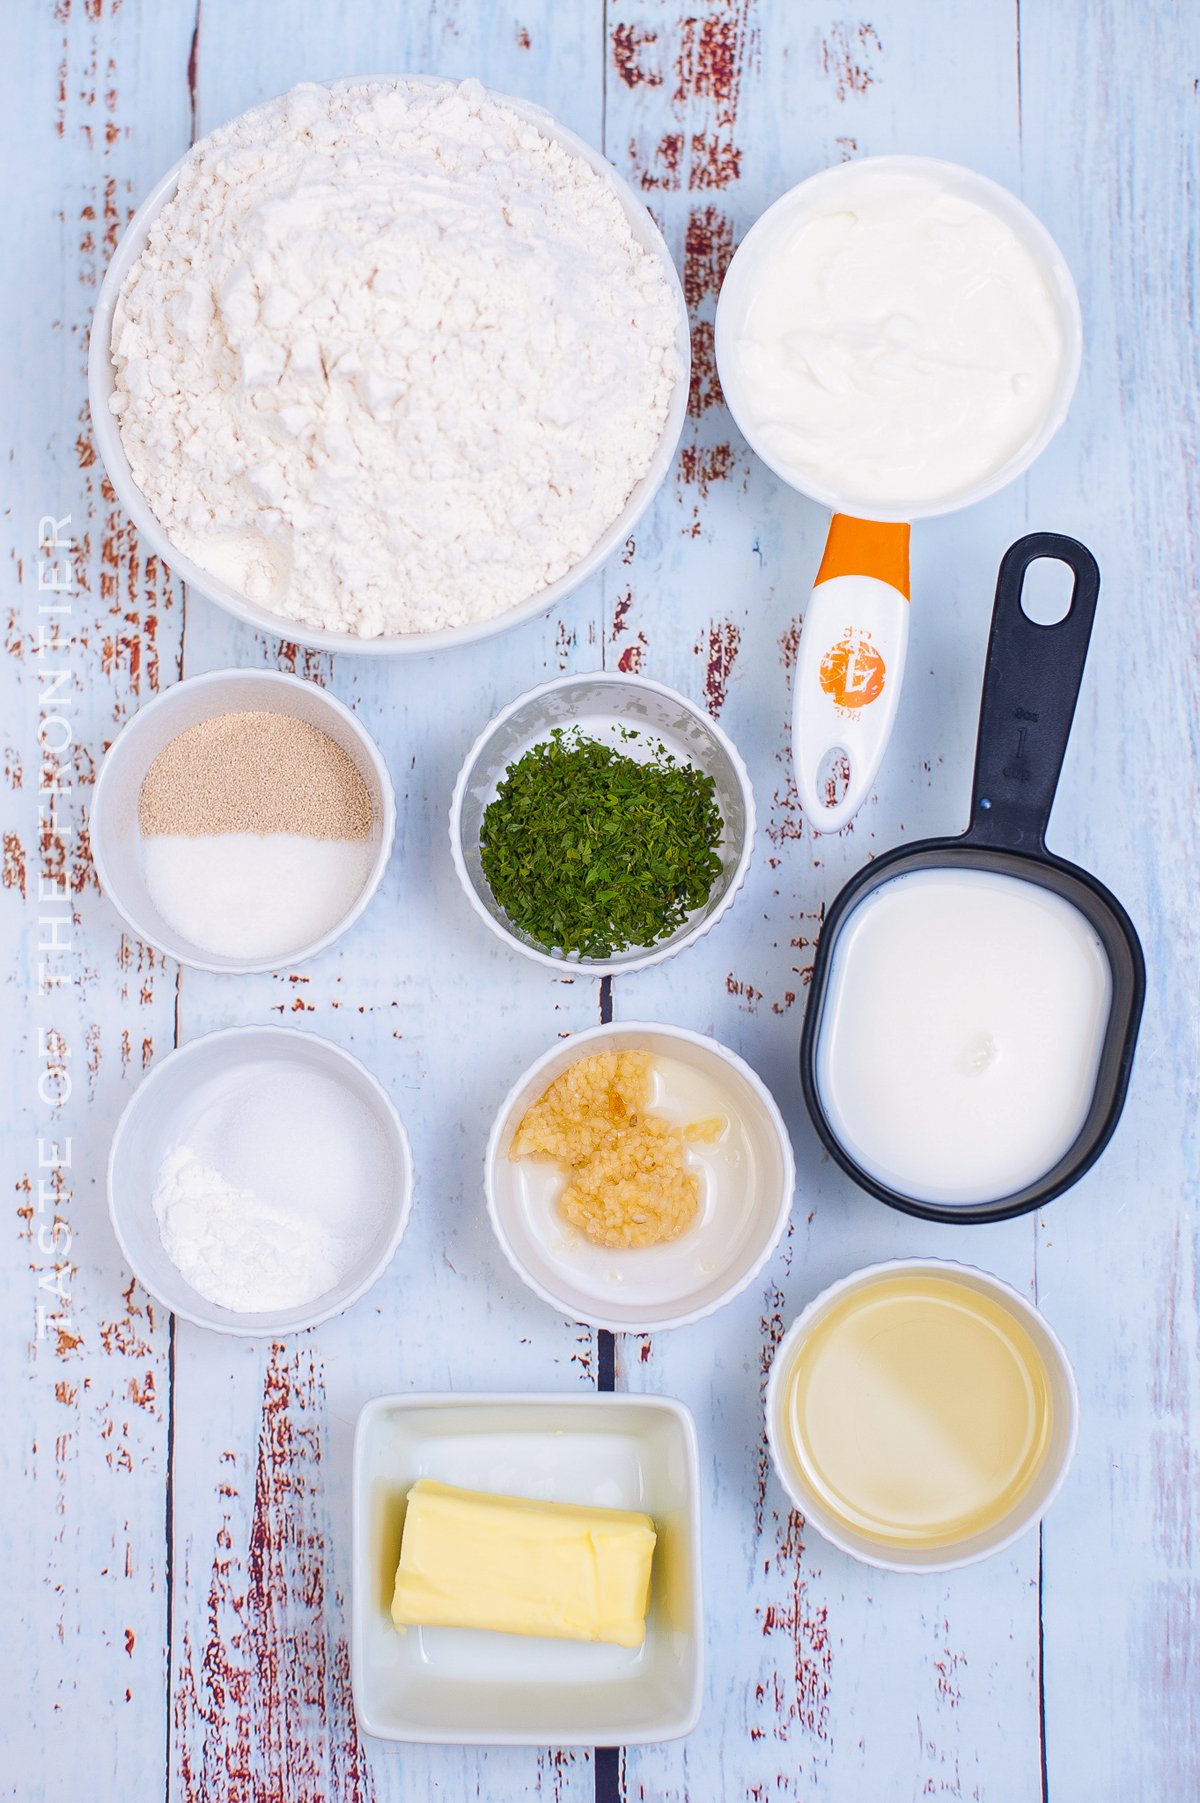 Ingredients for Garlic Butter Naan